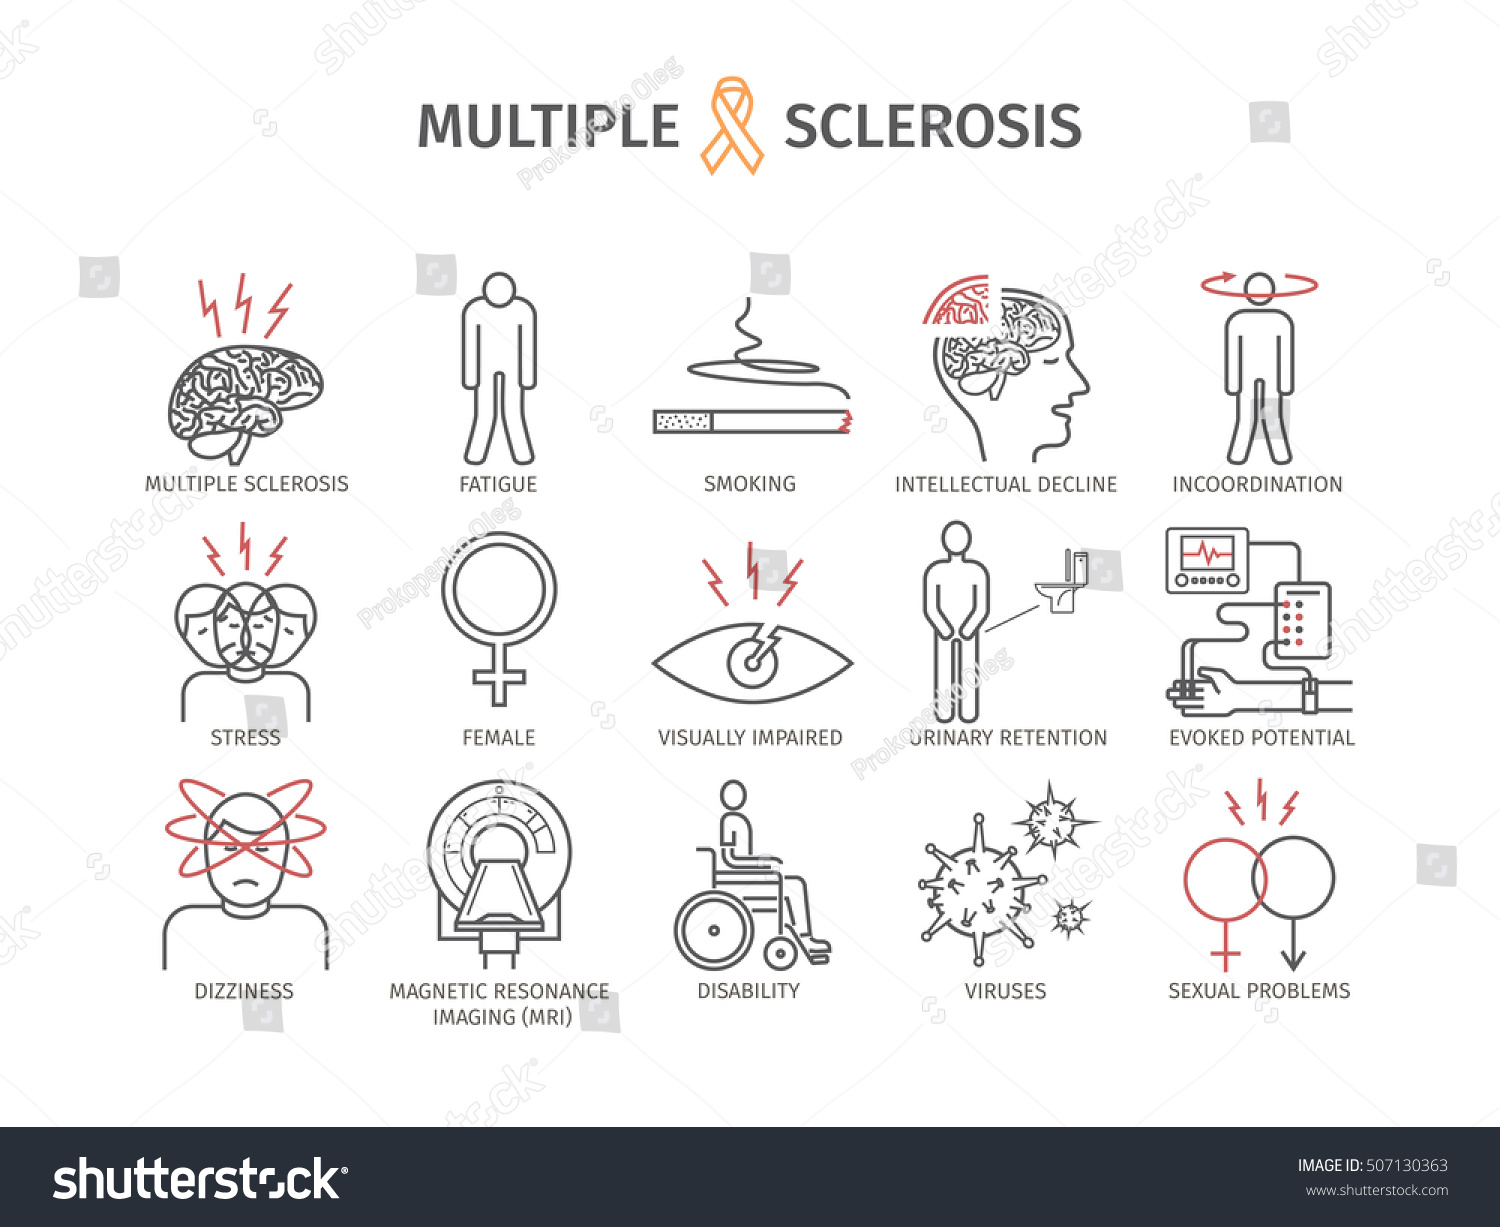 Symptoms multiple sclerosis 7 Strange